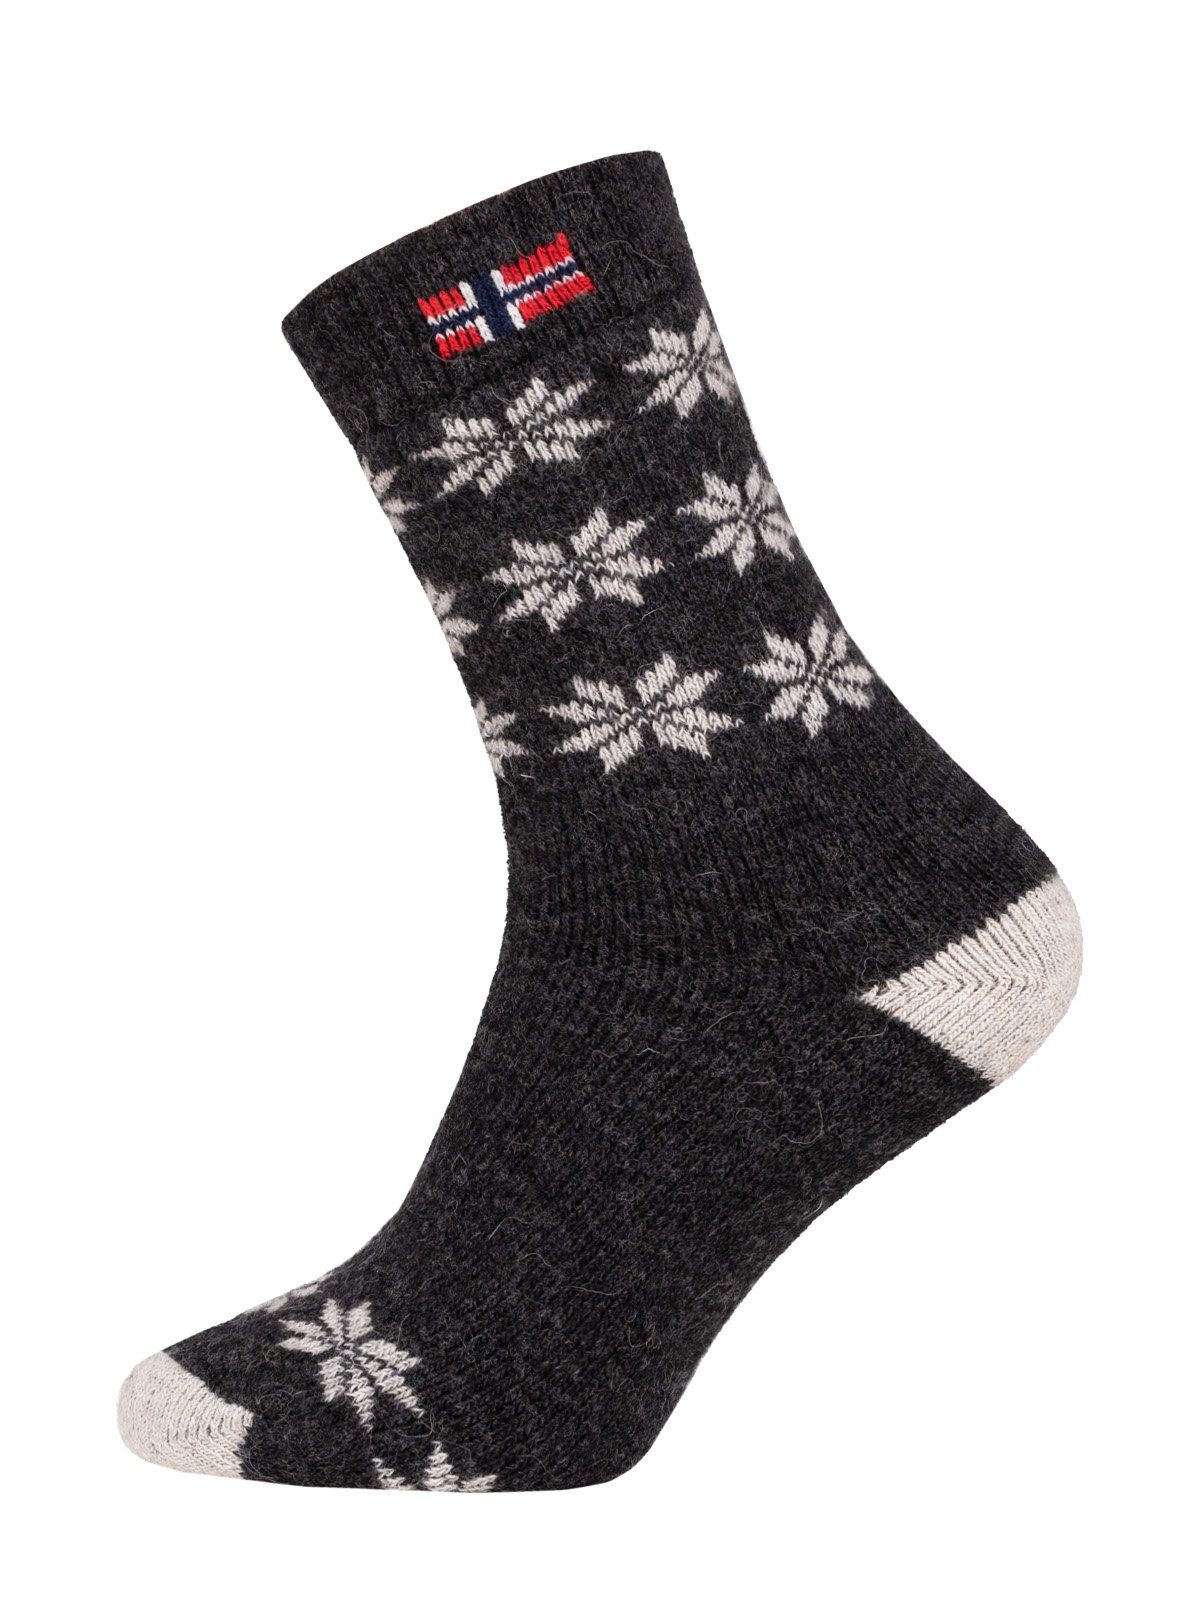 HomeOfSocks Socken Skandinavische Wollsocke "Snowflake Norwegen" Nordic Kuschelsocken Dicke Socken Hyggelig Warm Hoher 80% Wollanteil Norwegischem Design Anthrazit